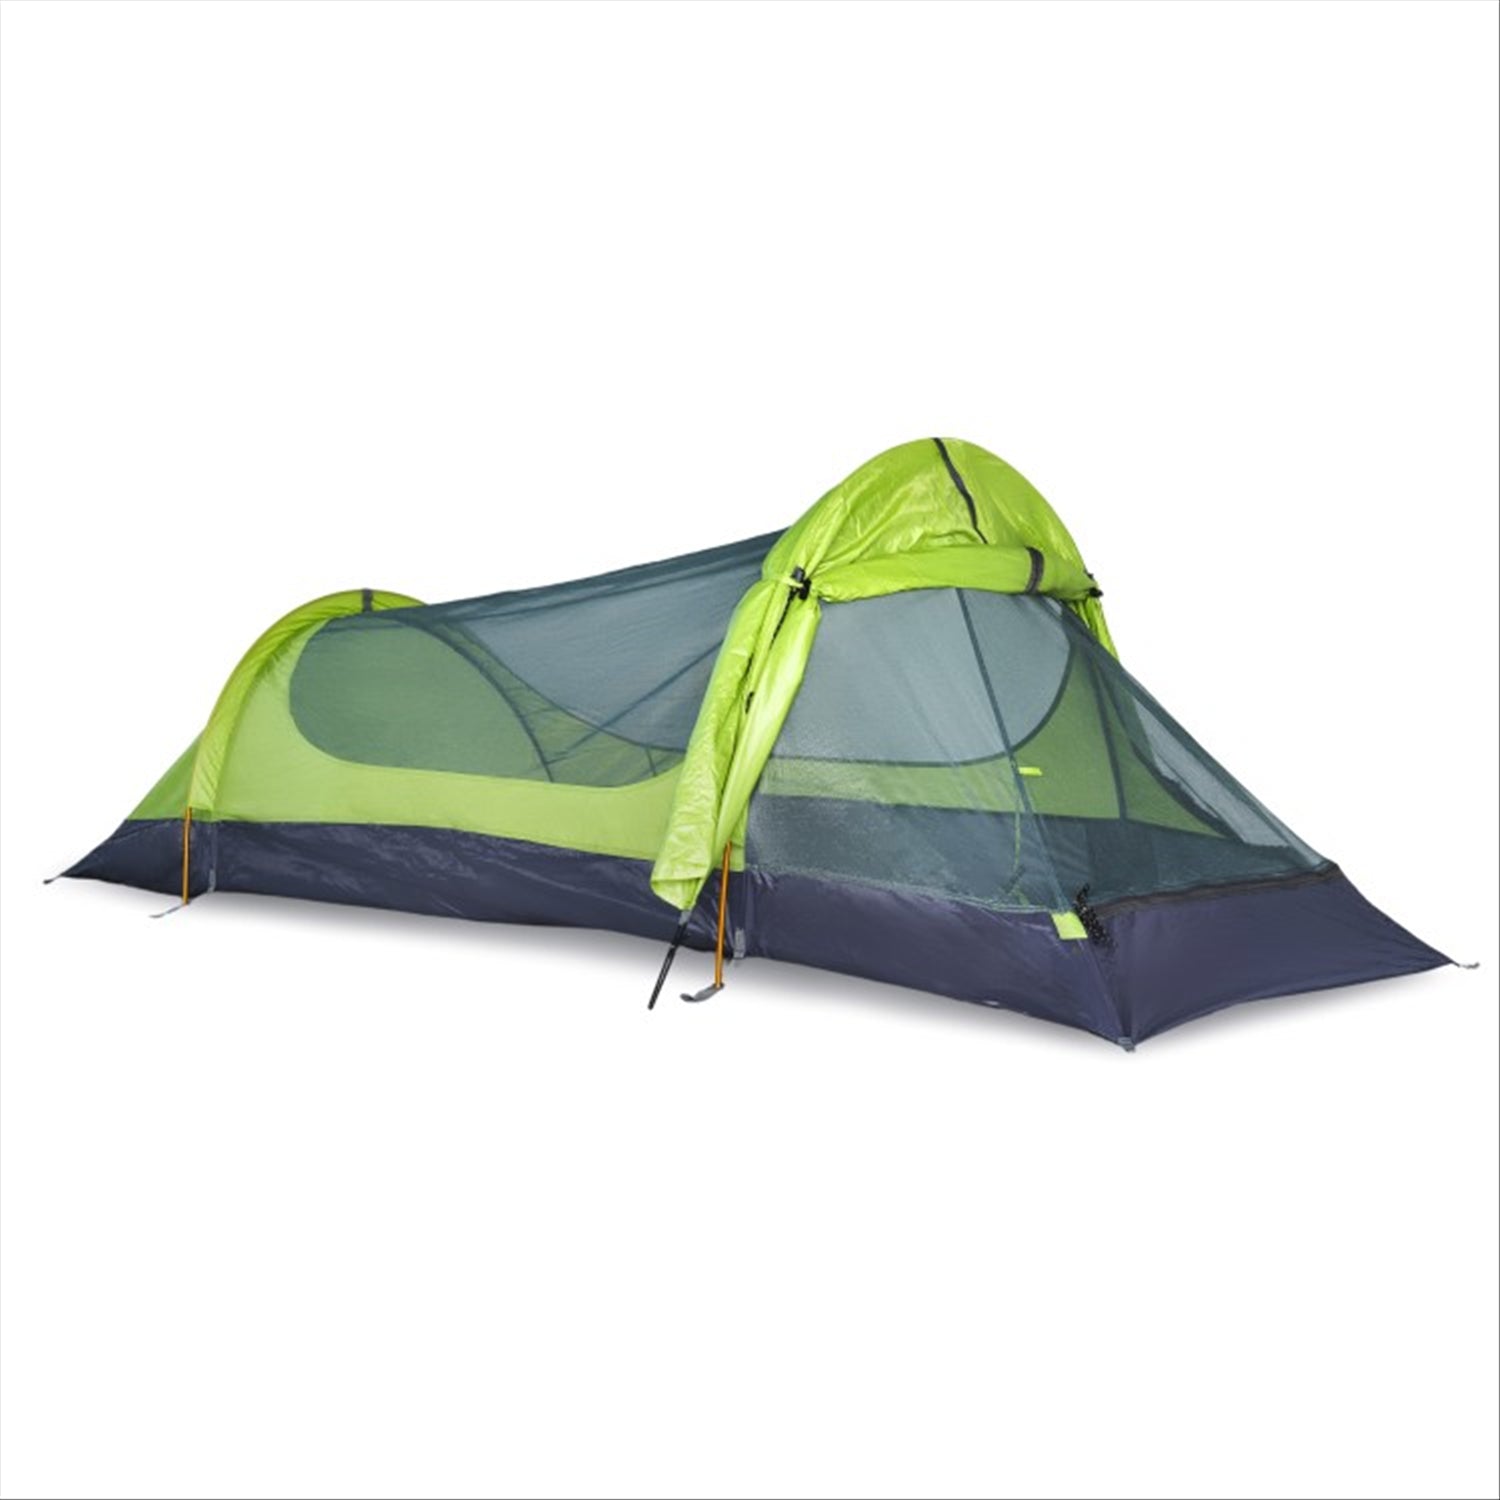 Orson Ranger 1 - Lightweight 1 Person Backpacking Tent, 1.35kg